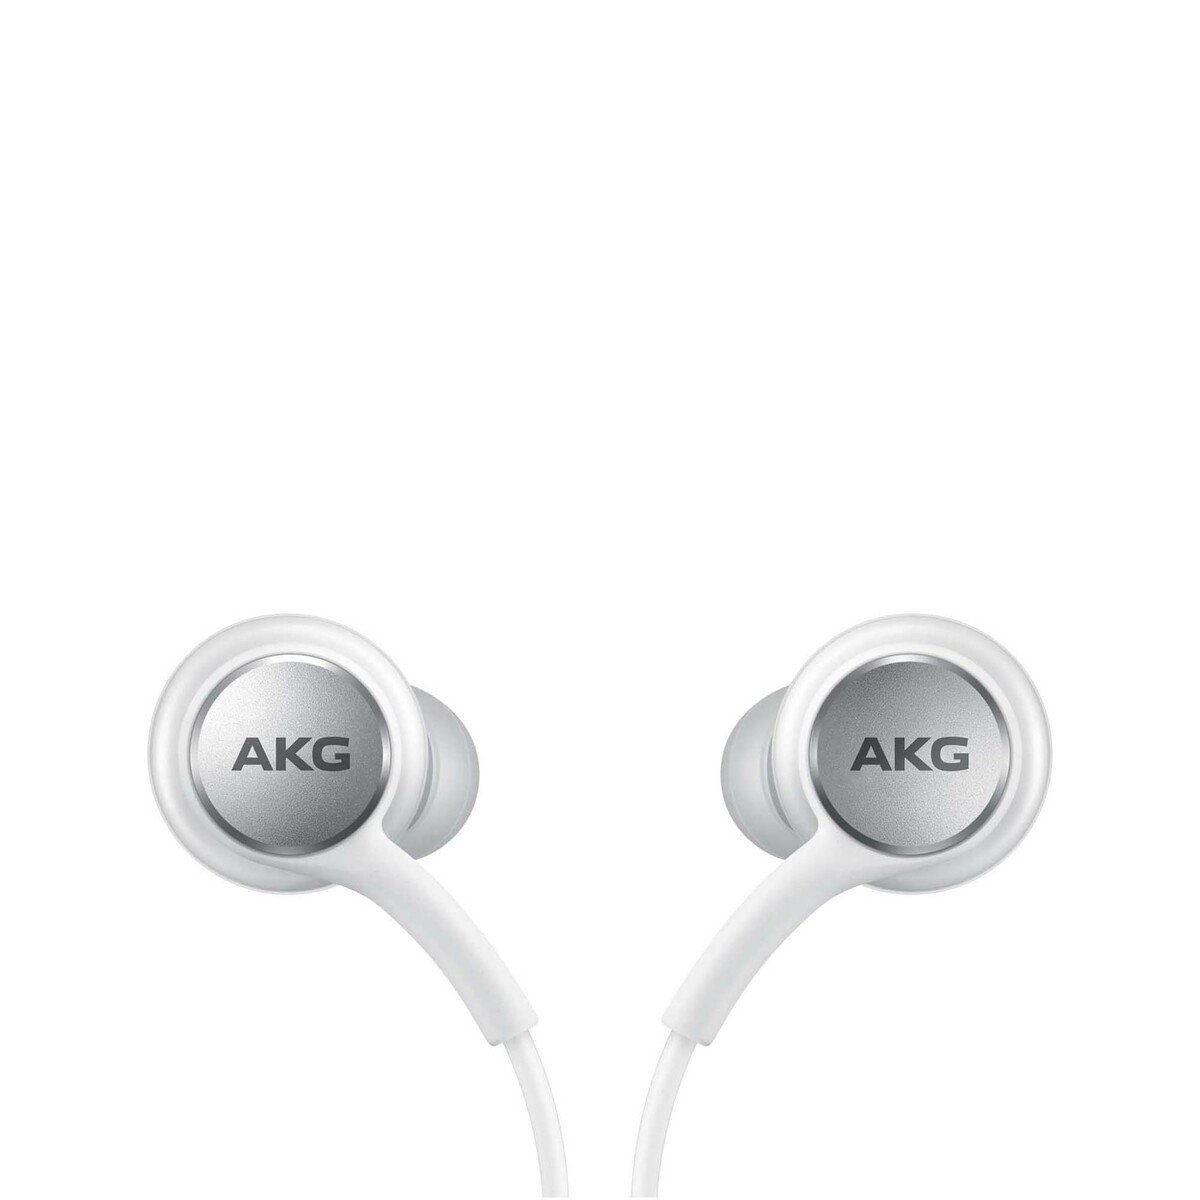 Samsung Stereo In-Ear Earphones Type-C EO-IC100 (White)